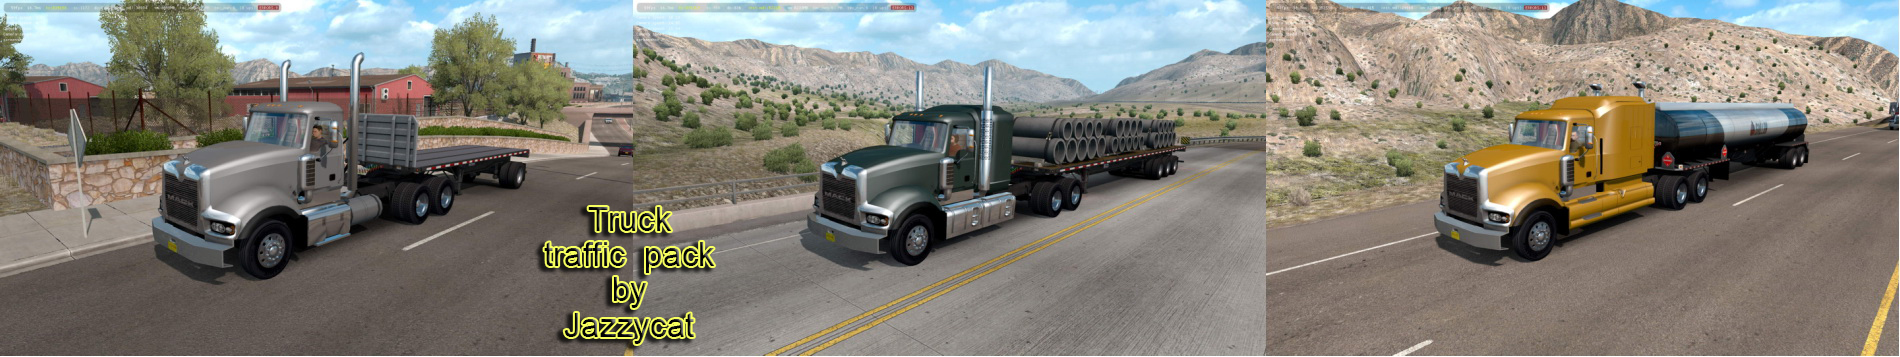 truck23 new